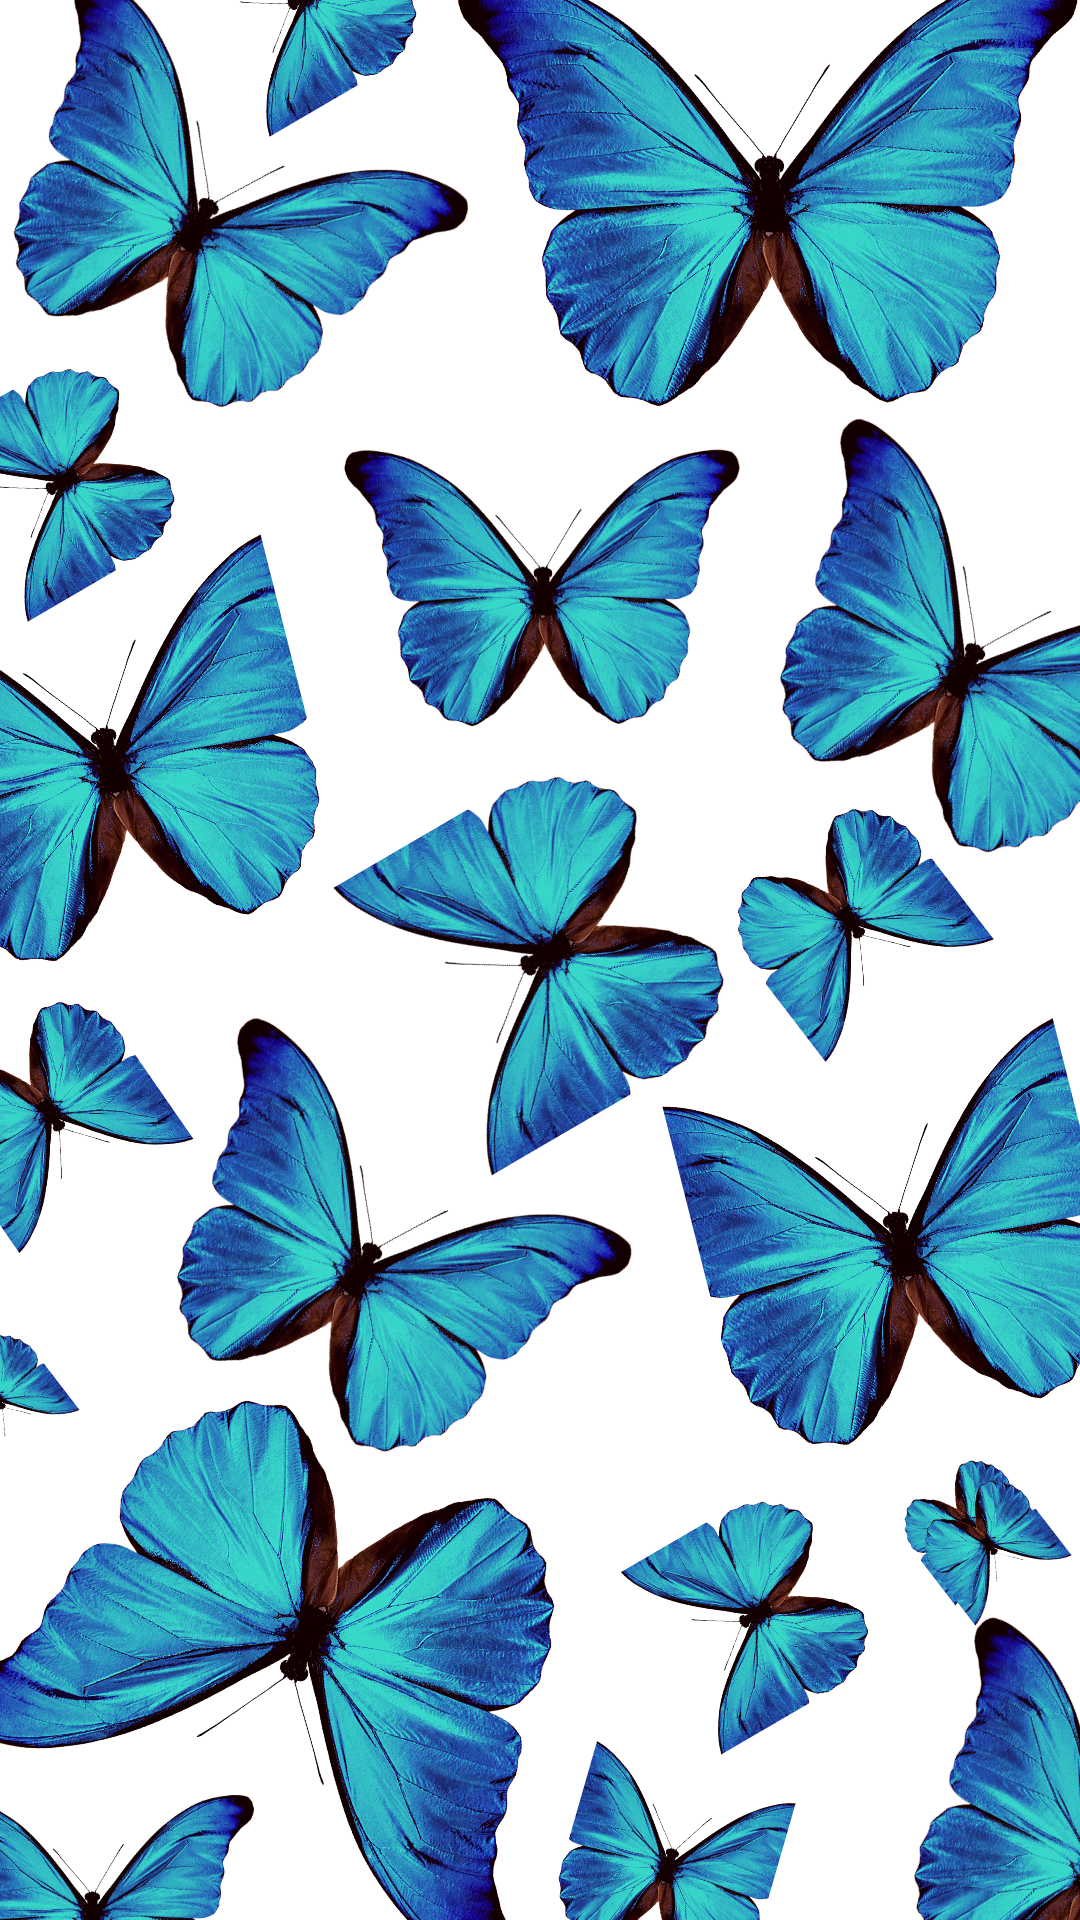 Blue Aesthetic Wallpaper. Butterfly wallpaper iphone, Blue butterfly wallpaper, Butterfly wallpaper background